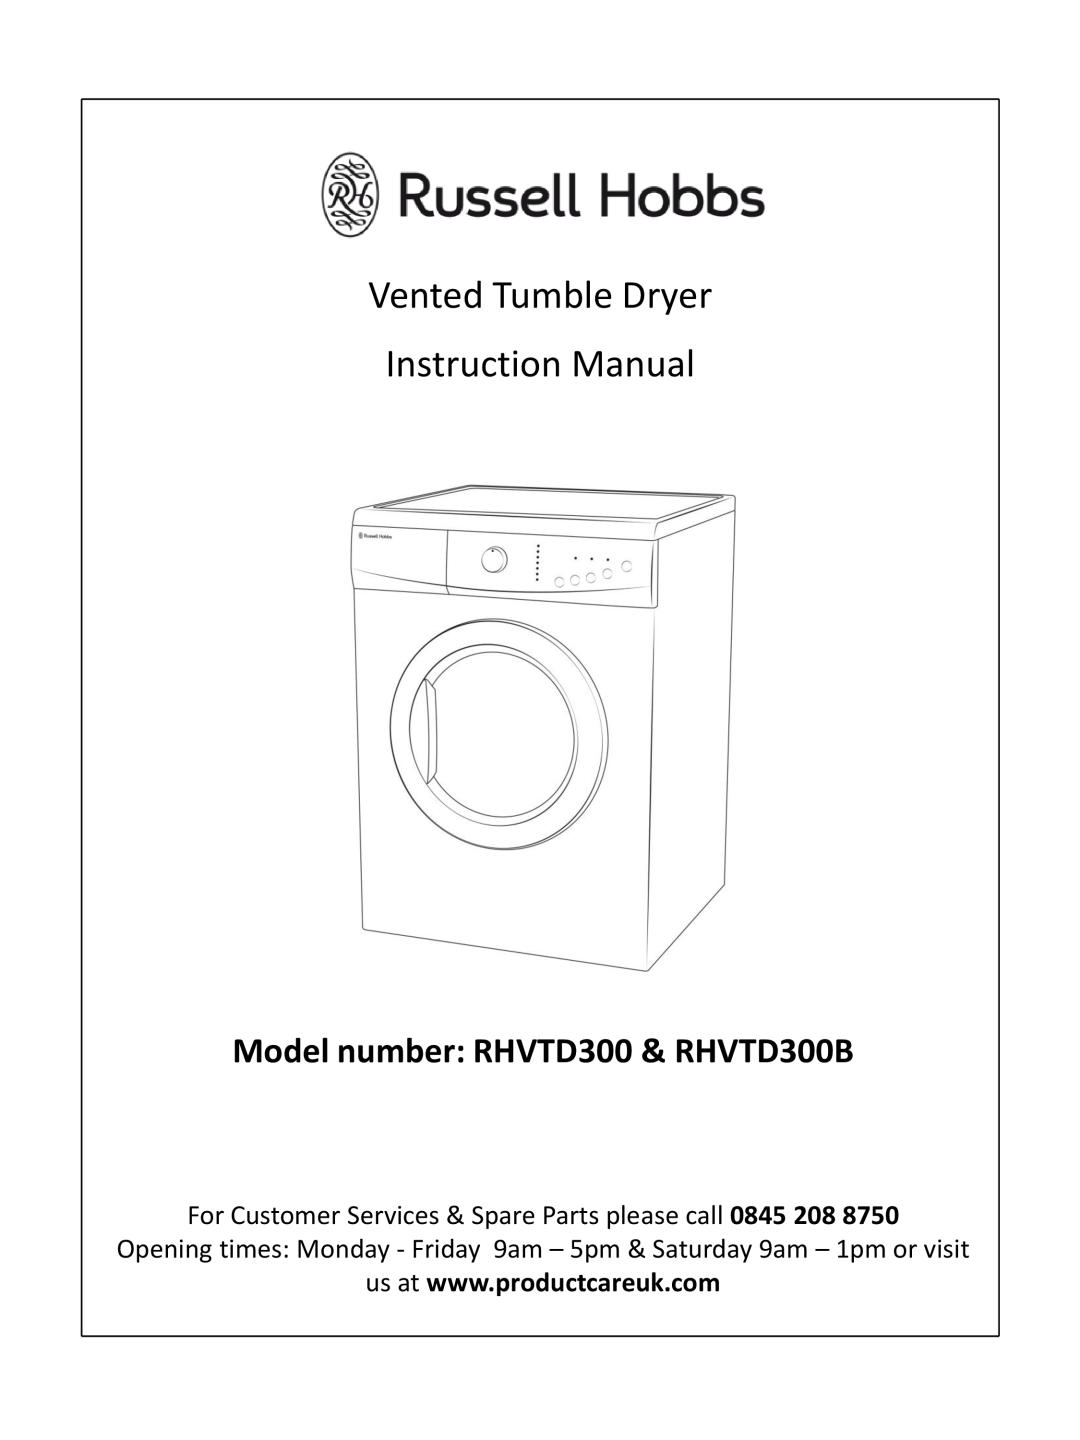 Russell Hobbs instruction manual Model number RHVTD300 & RHVTD300B, Vented Tumble Dryer Instruction Manual 